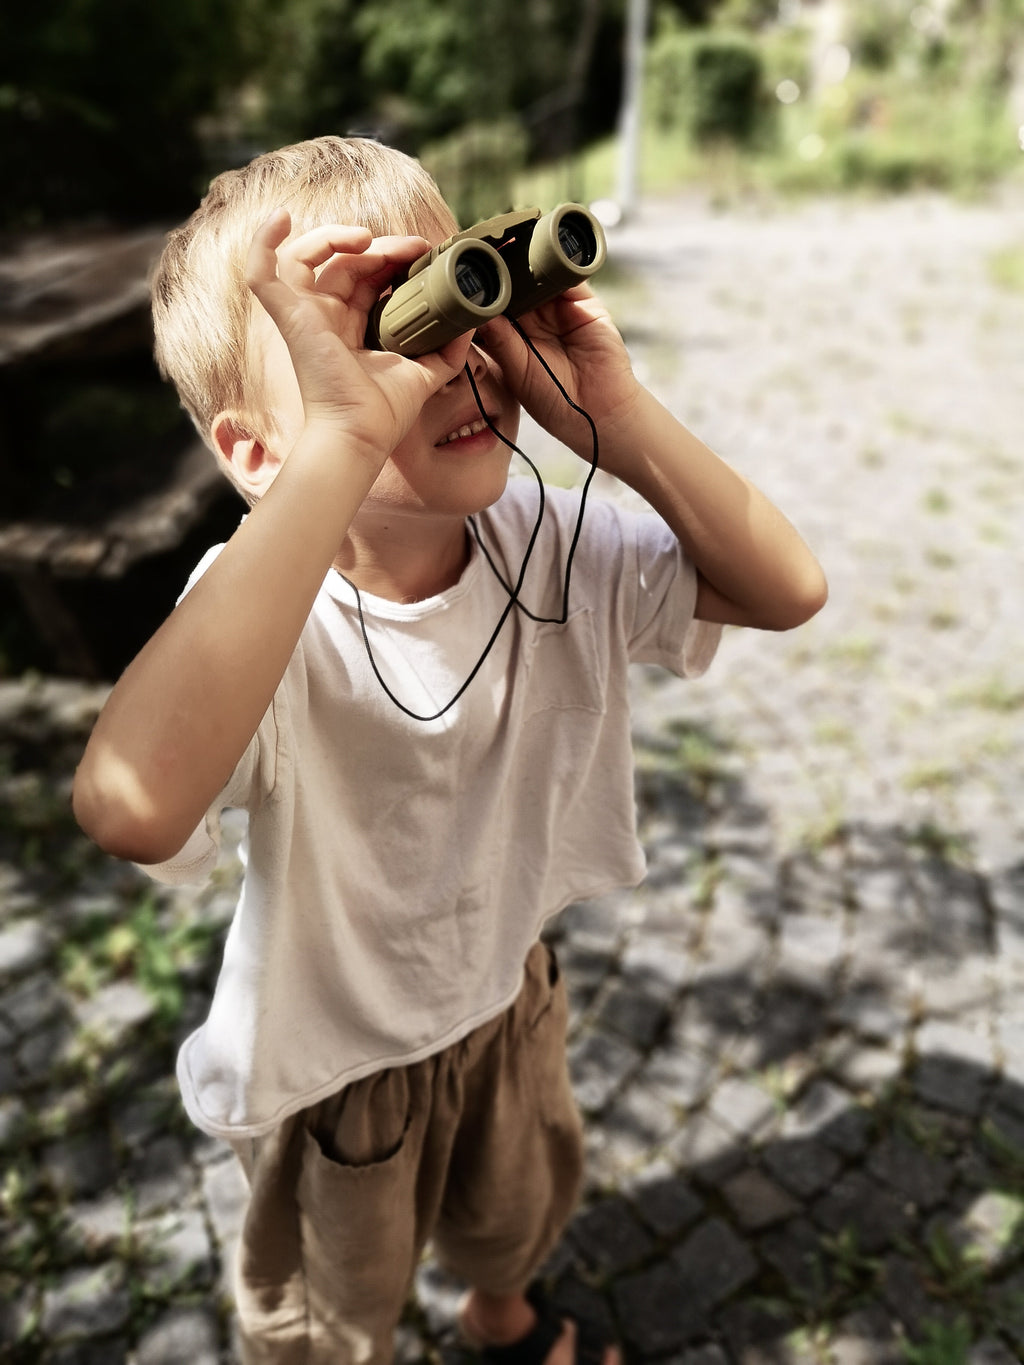 Binoculars for children